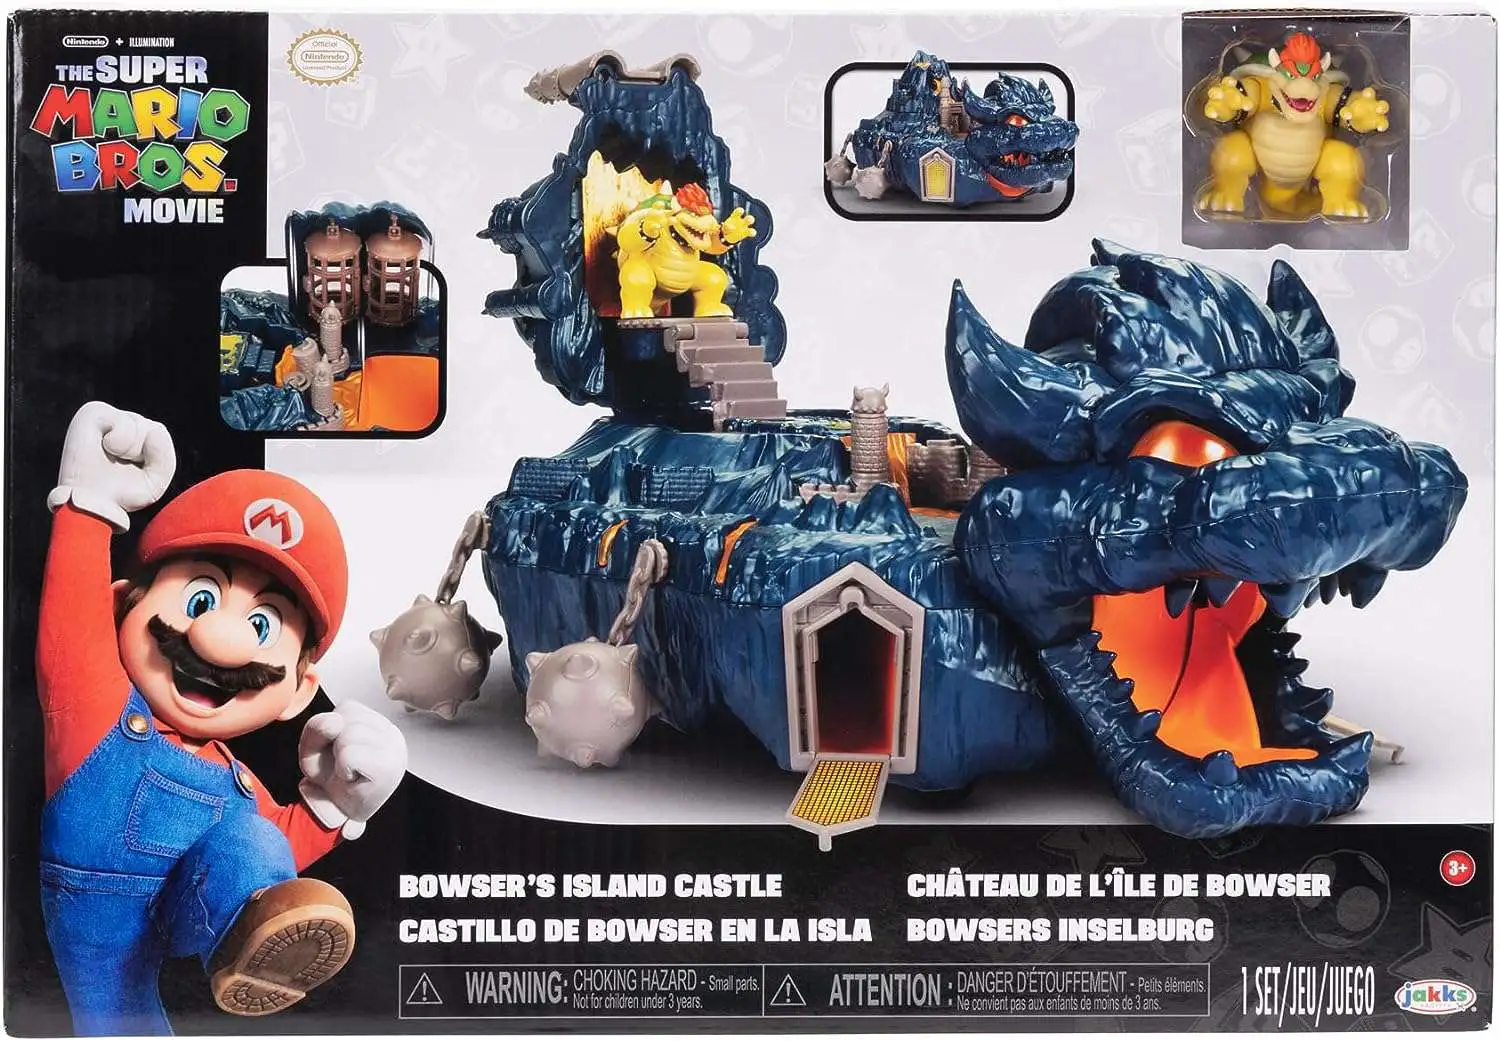 The Super Mario Bros. Movie 7 Deluxe Bowser Figure